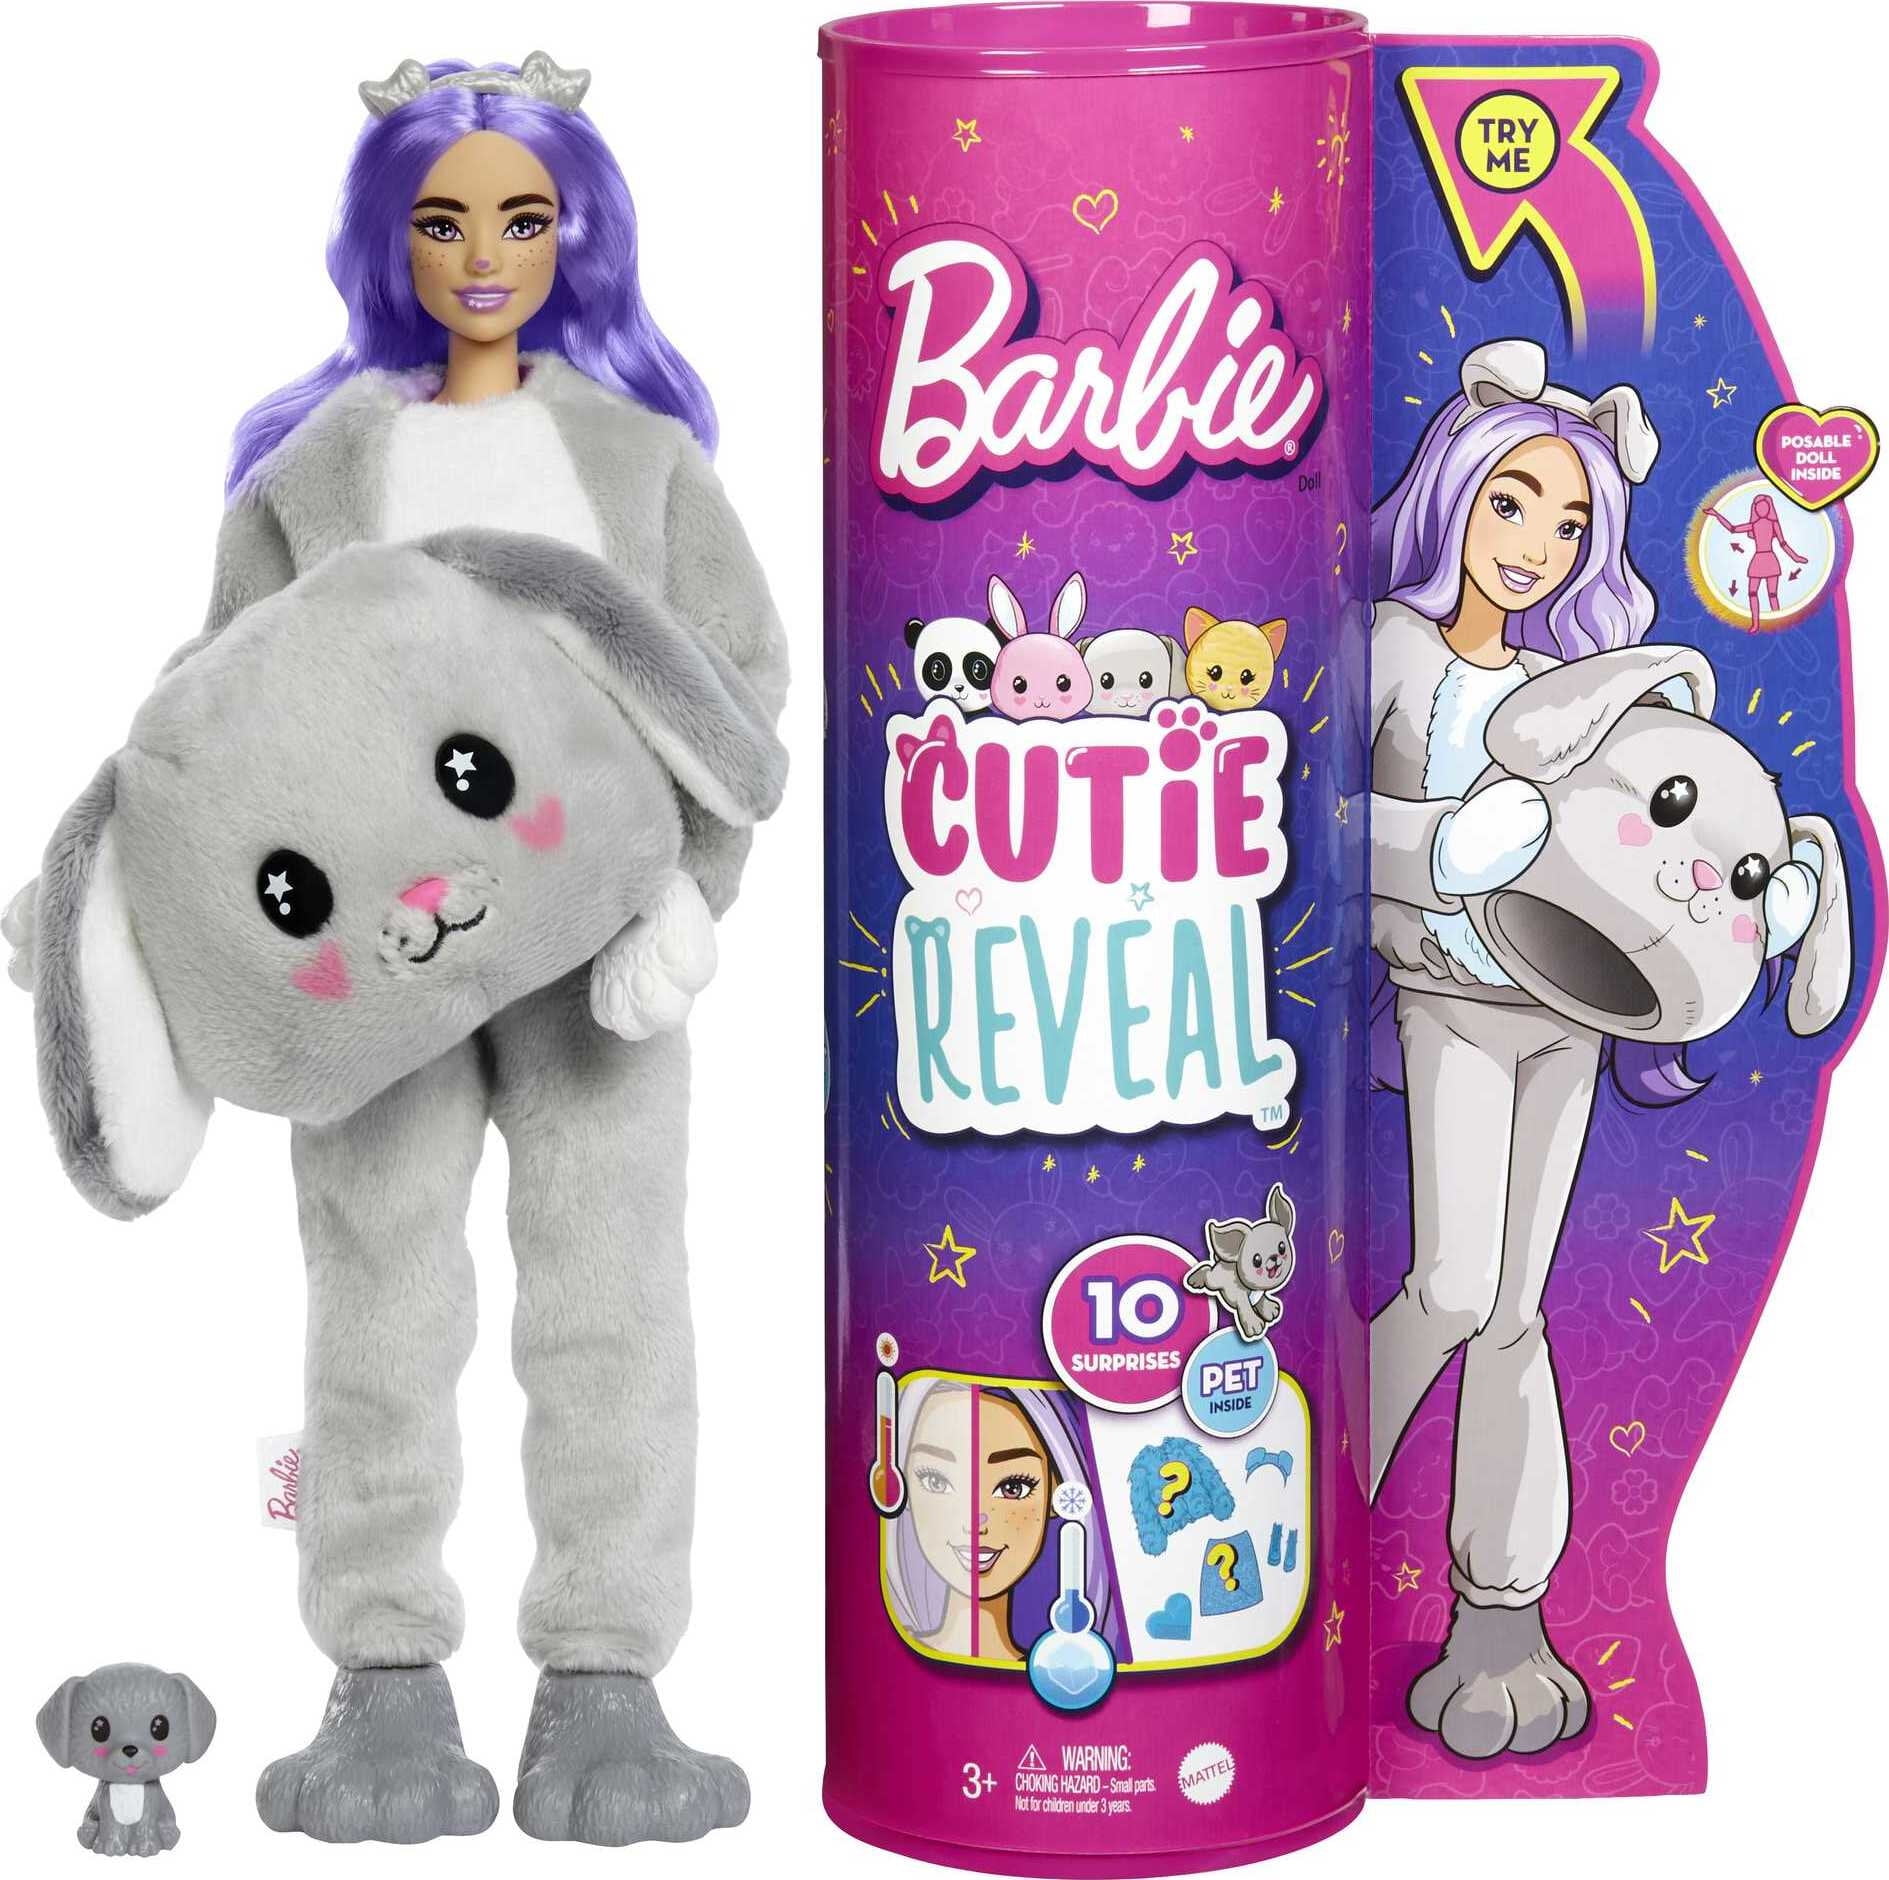 Barbie Reveal Fashion Doll with Puppy Plush Costume, Mini & - Walmart.com